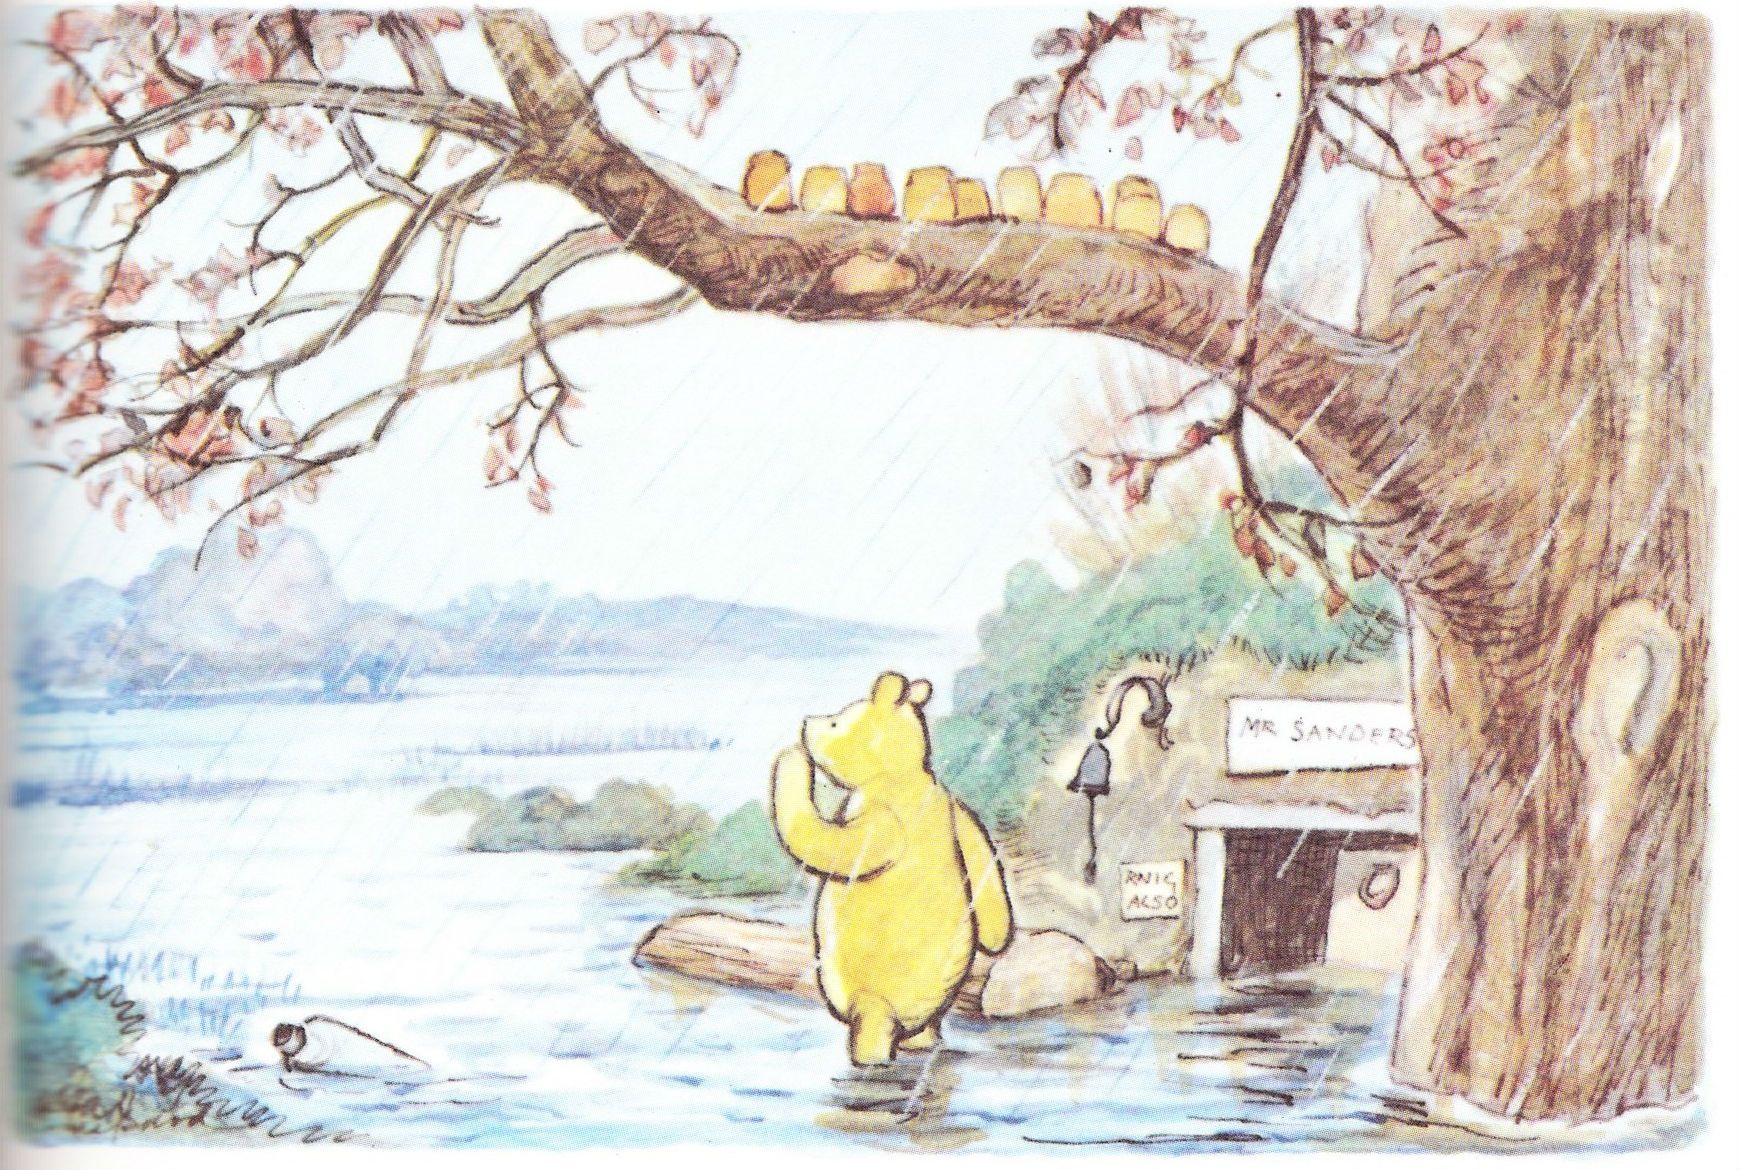 winnie the pooh illustrations - Google Search | Winnie the pooh ...